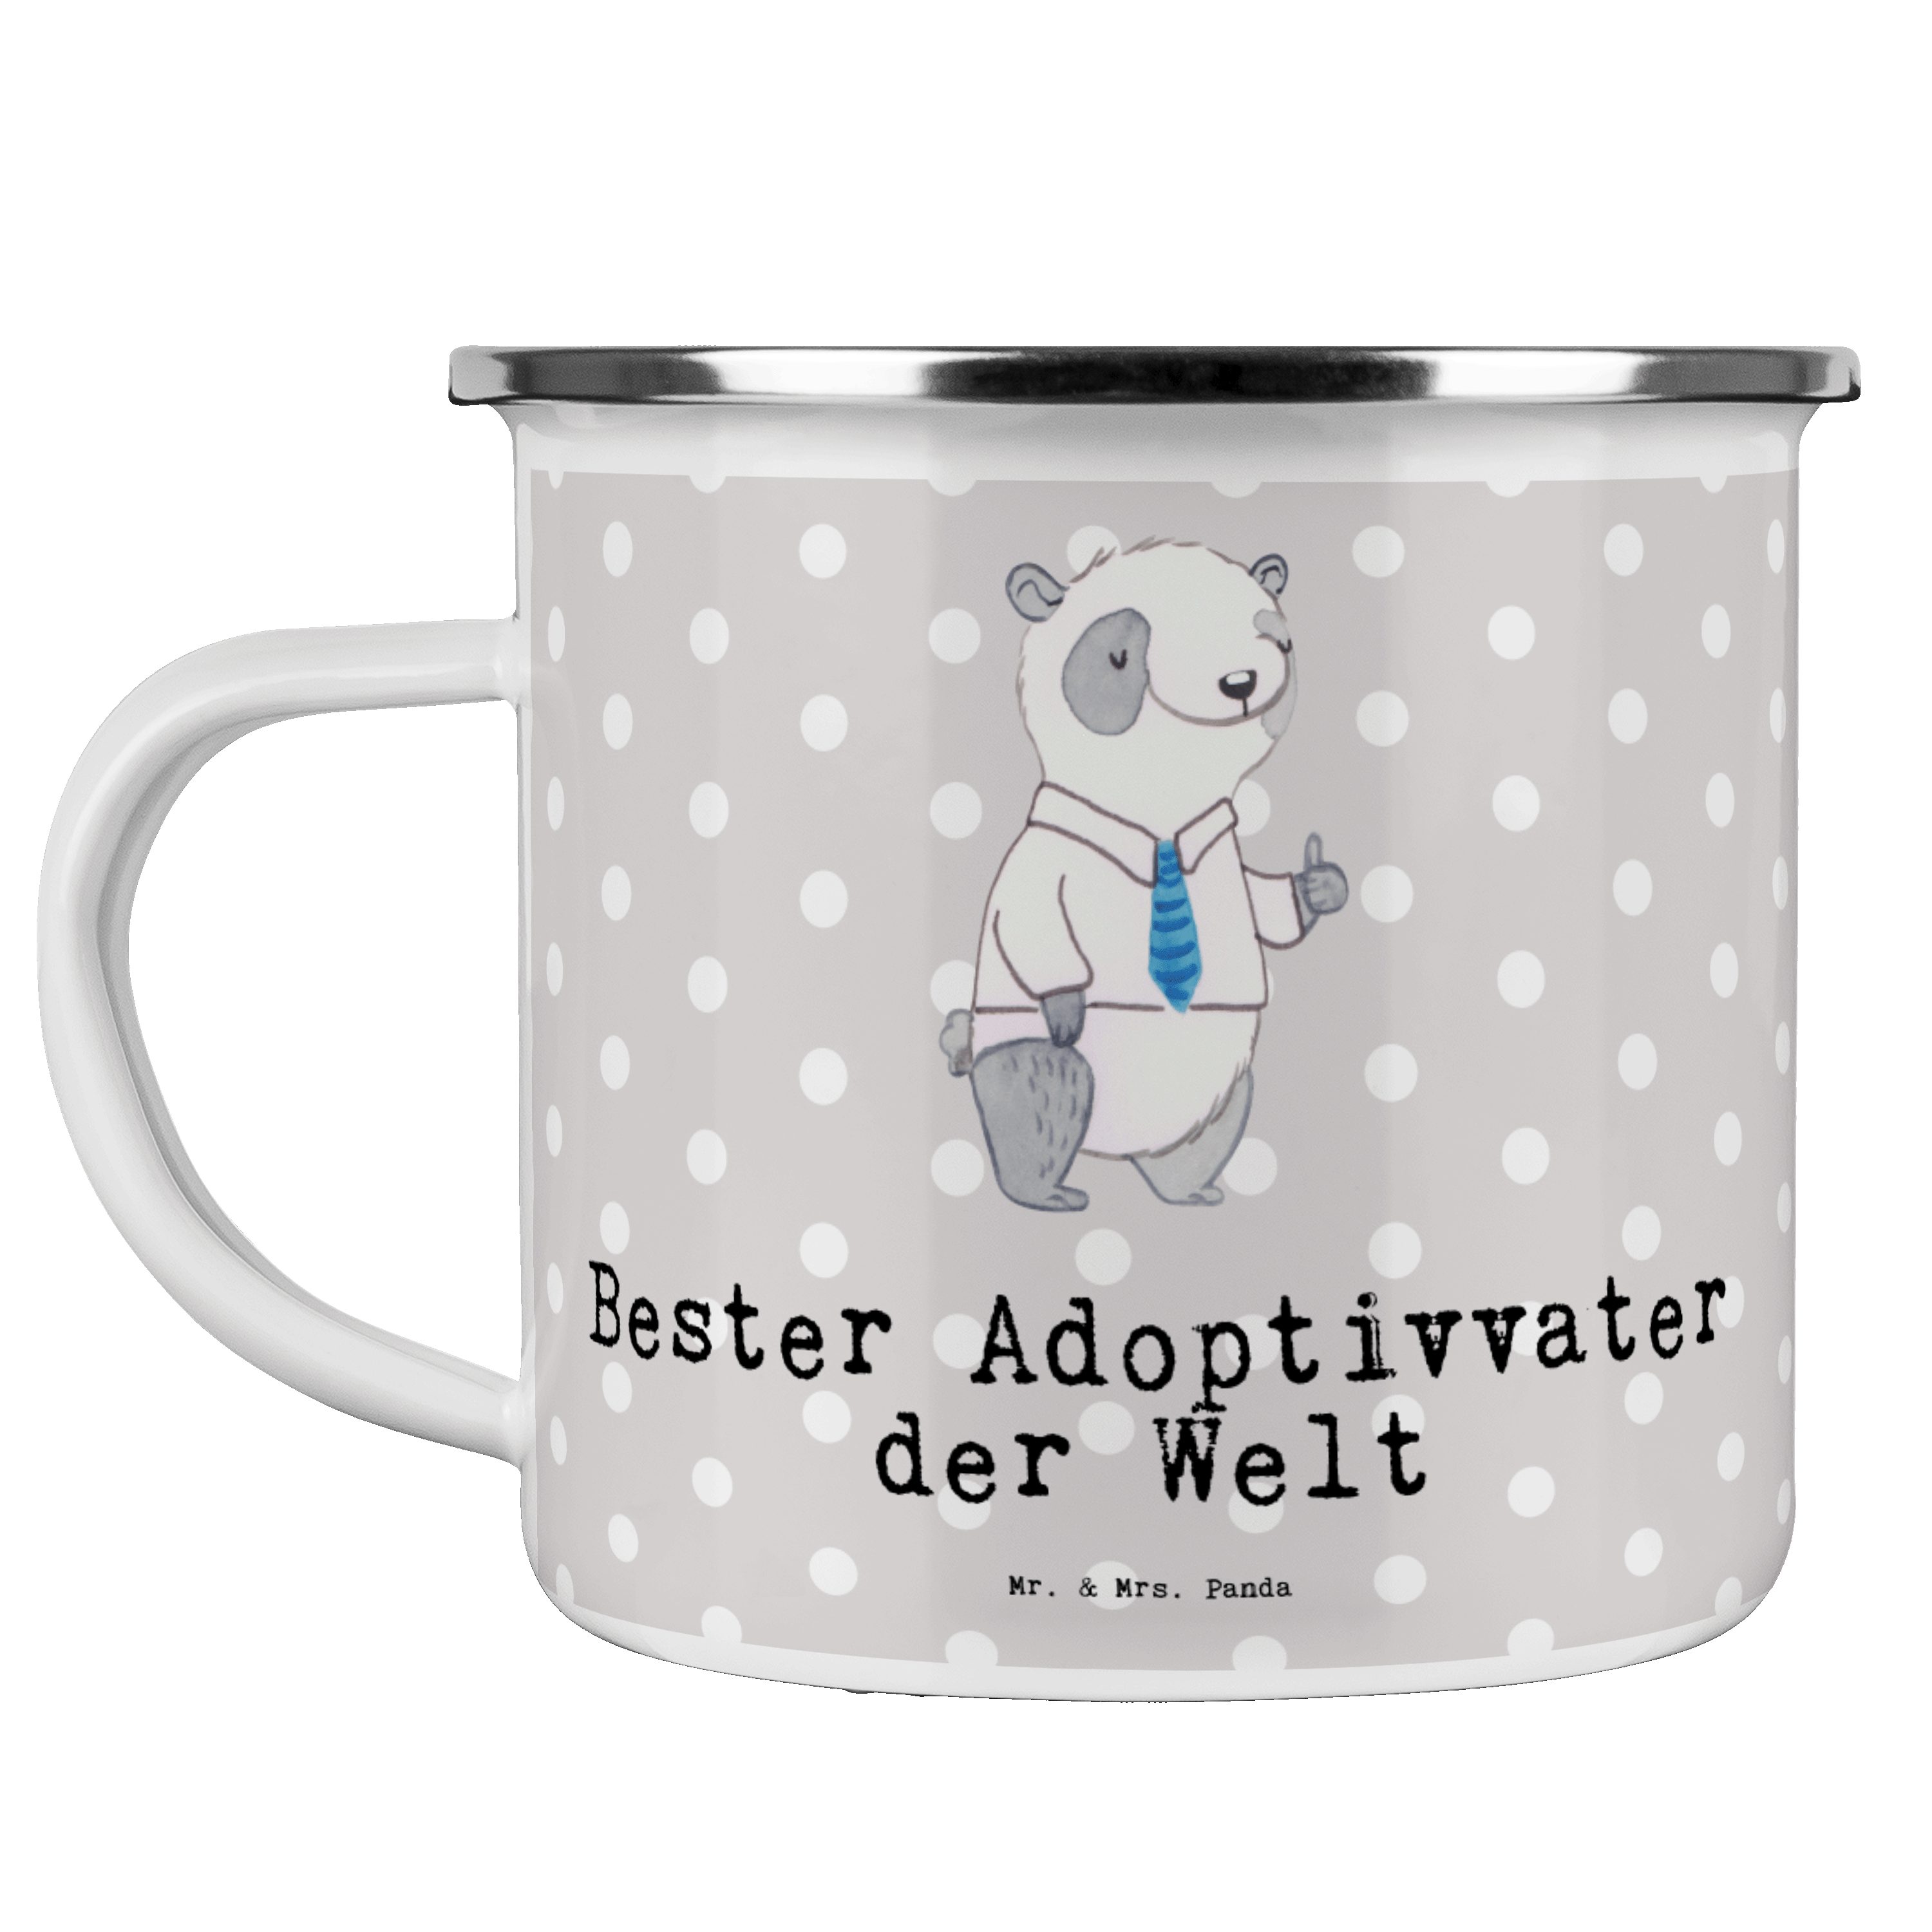 Geschenk, Adoptivvater Welt der - Becher adoptie, Mrs. Panda - & Bester Mr. Panda Pastell Emaille Grau